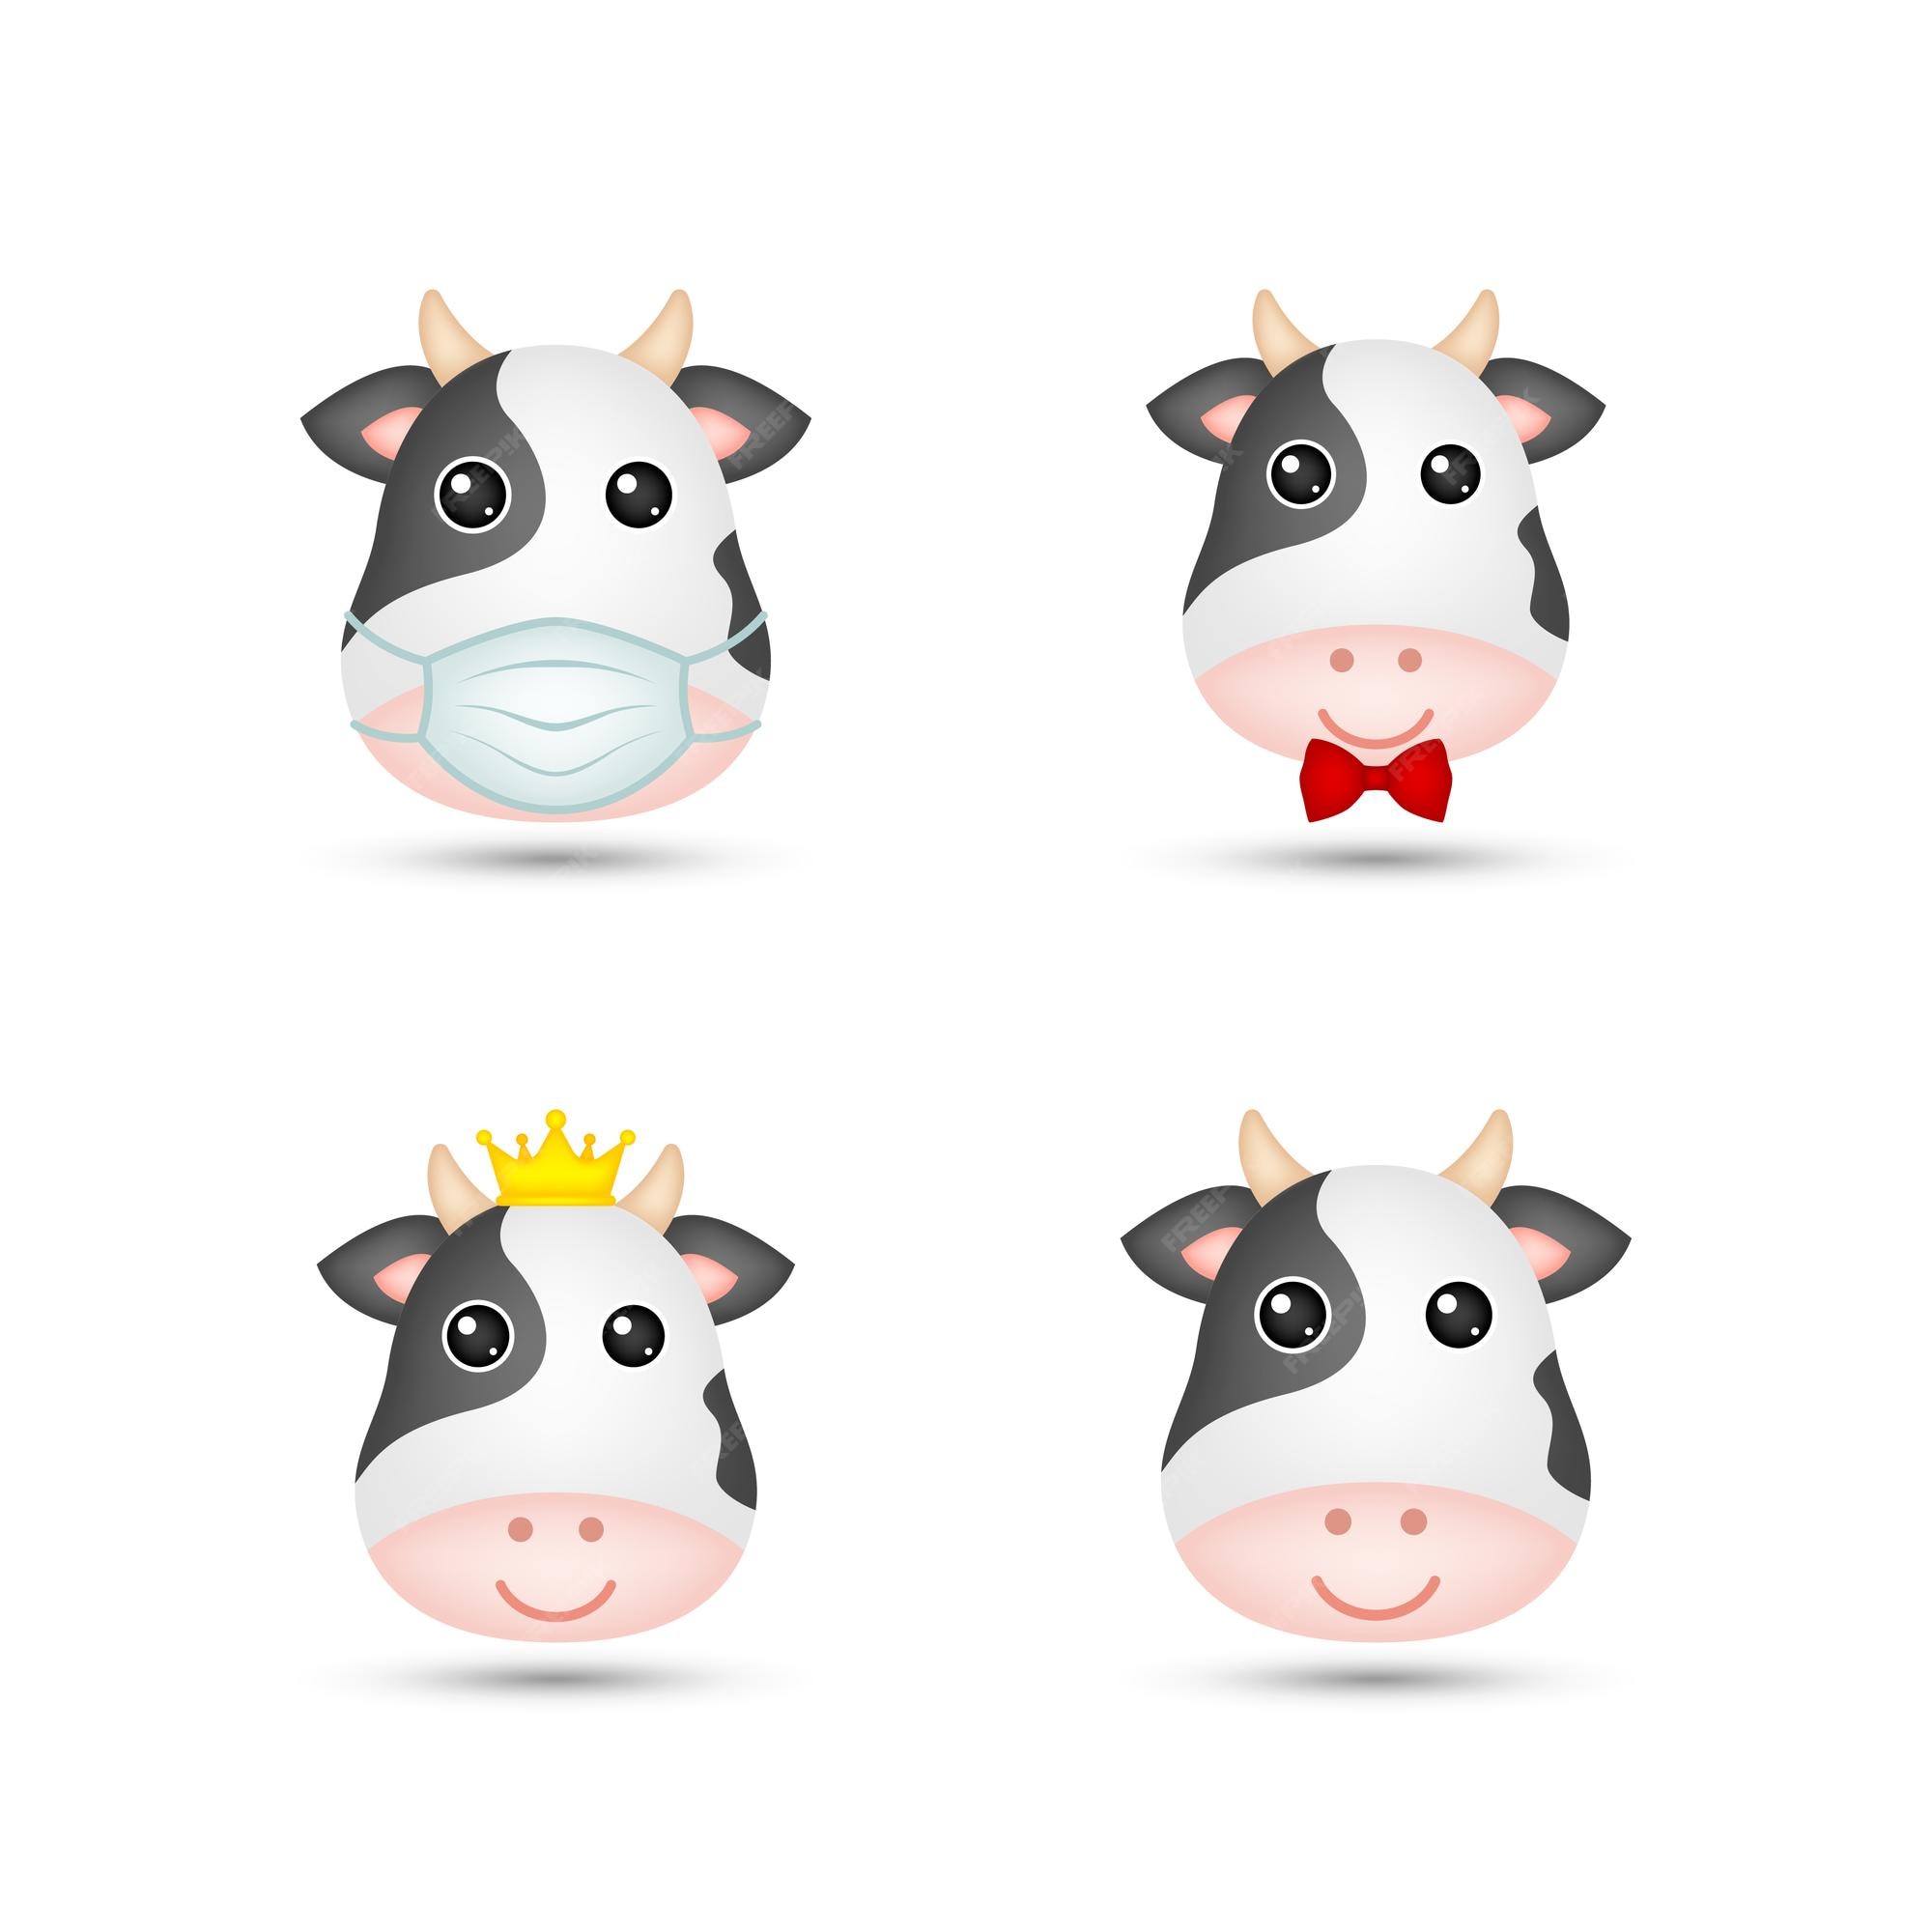 Cow eyes Vectors & Illustrations for Free Download | Freepik